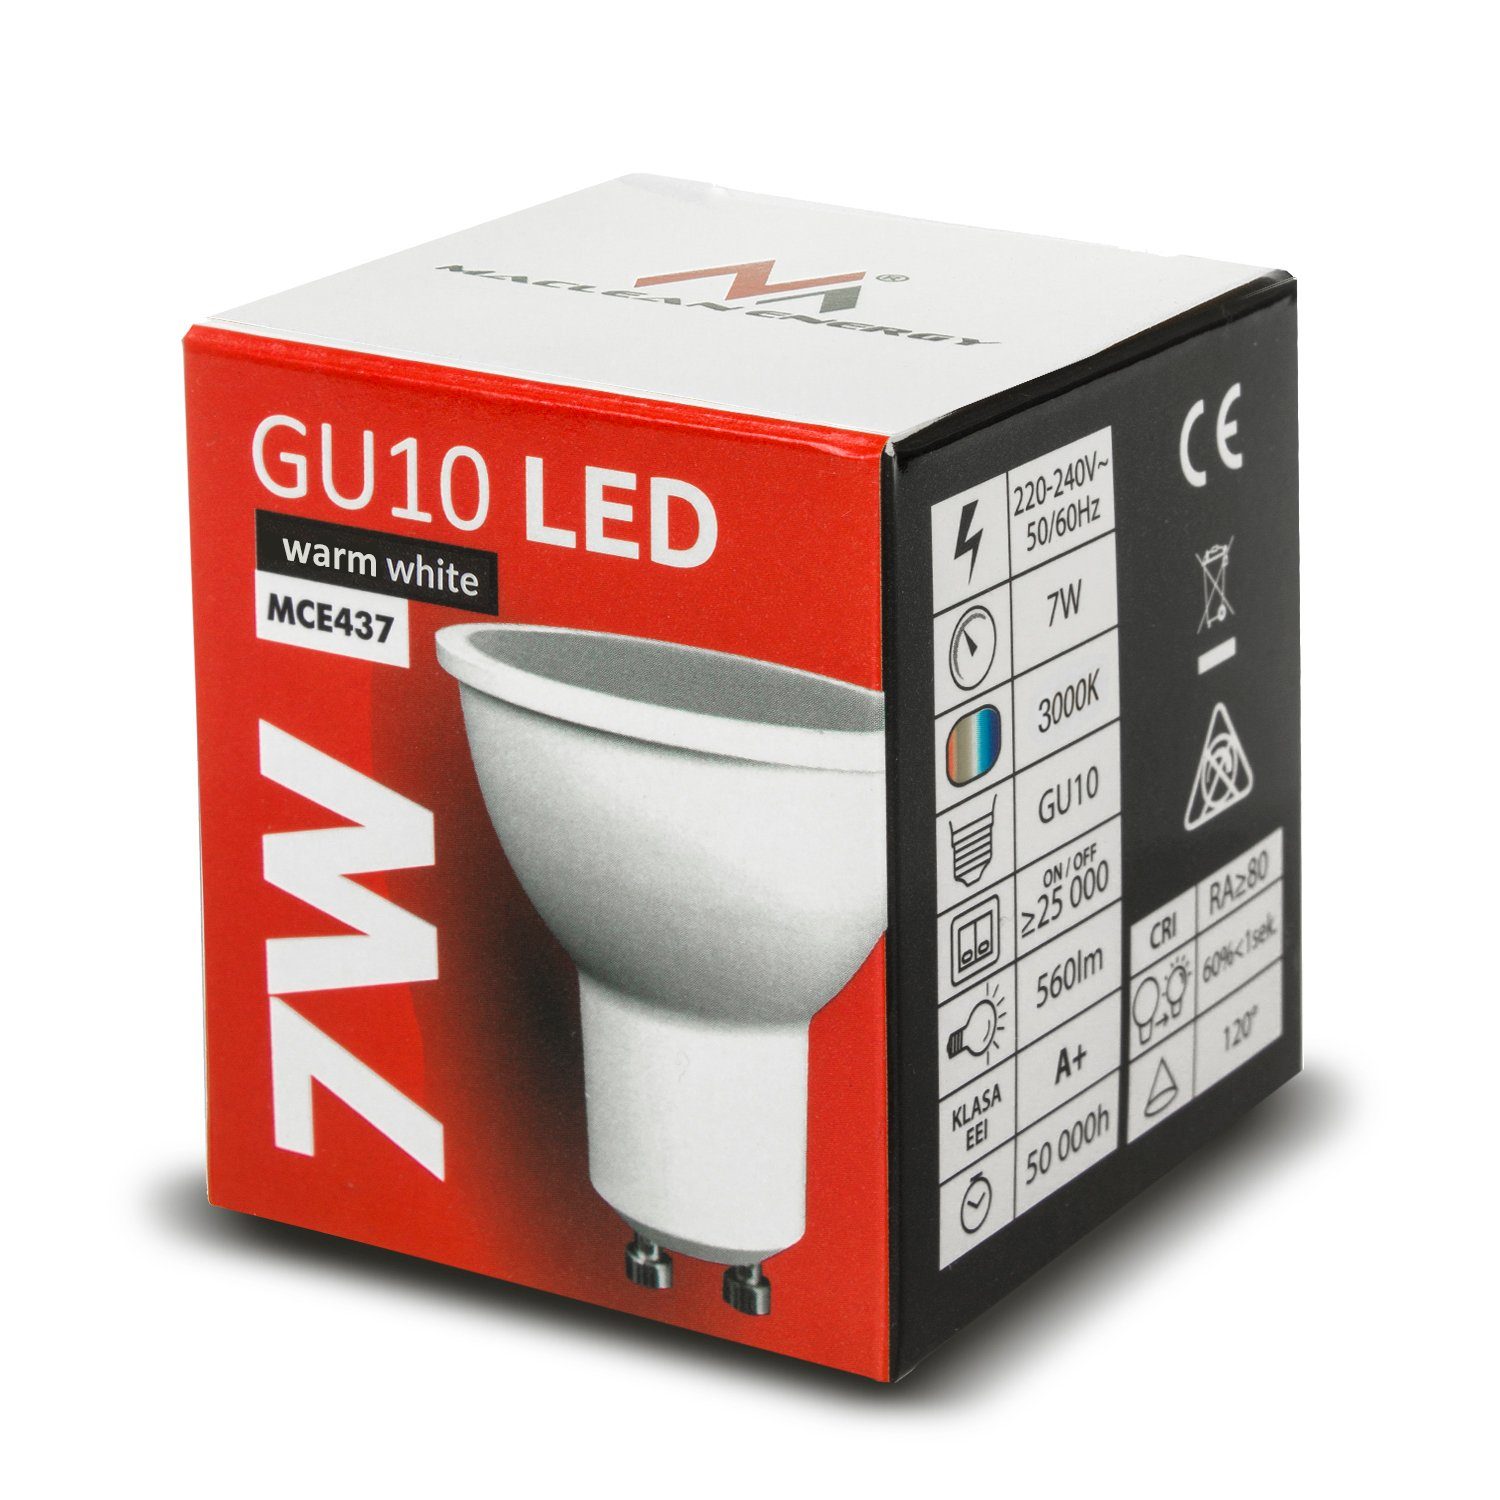 Warmweiß, Maclean LED-Leuchtmittel GU10 MCE437 LED-Leuchtmittel 3000K Warmweiß WW, GU10, 7W -